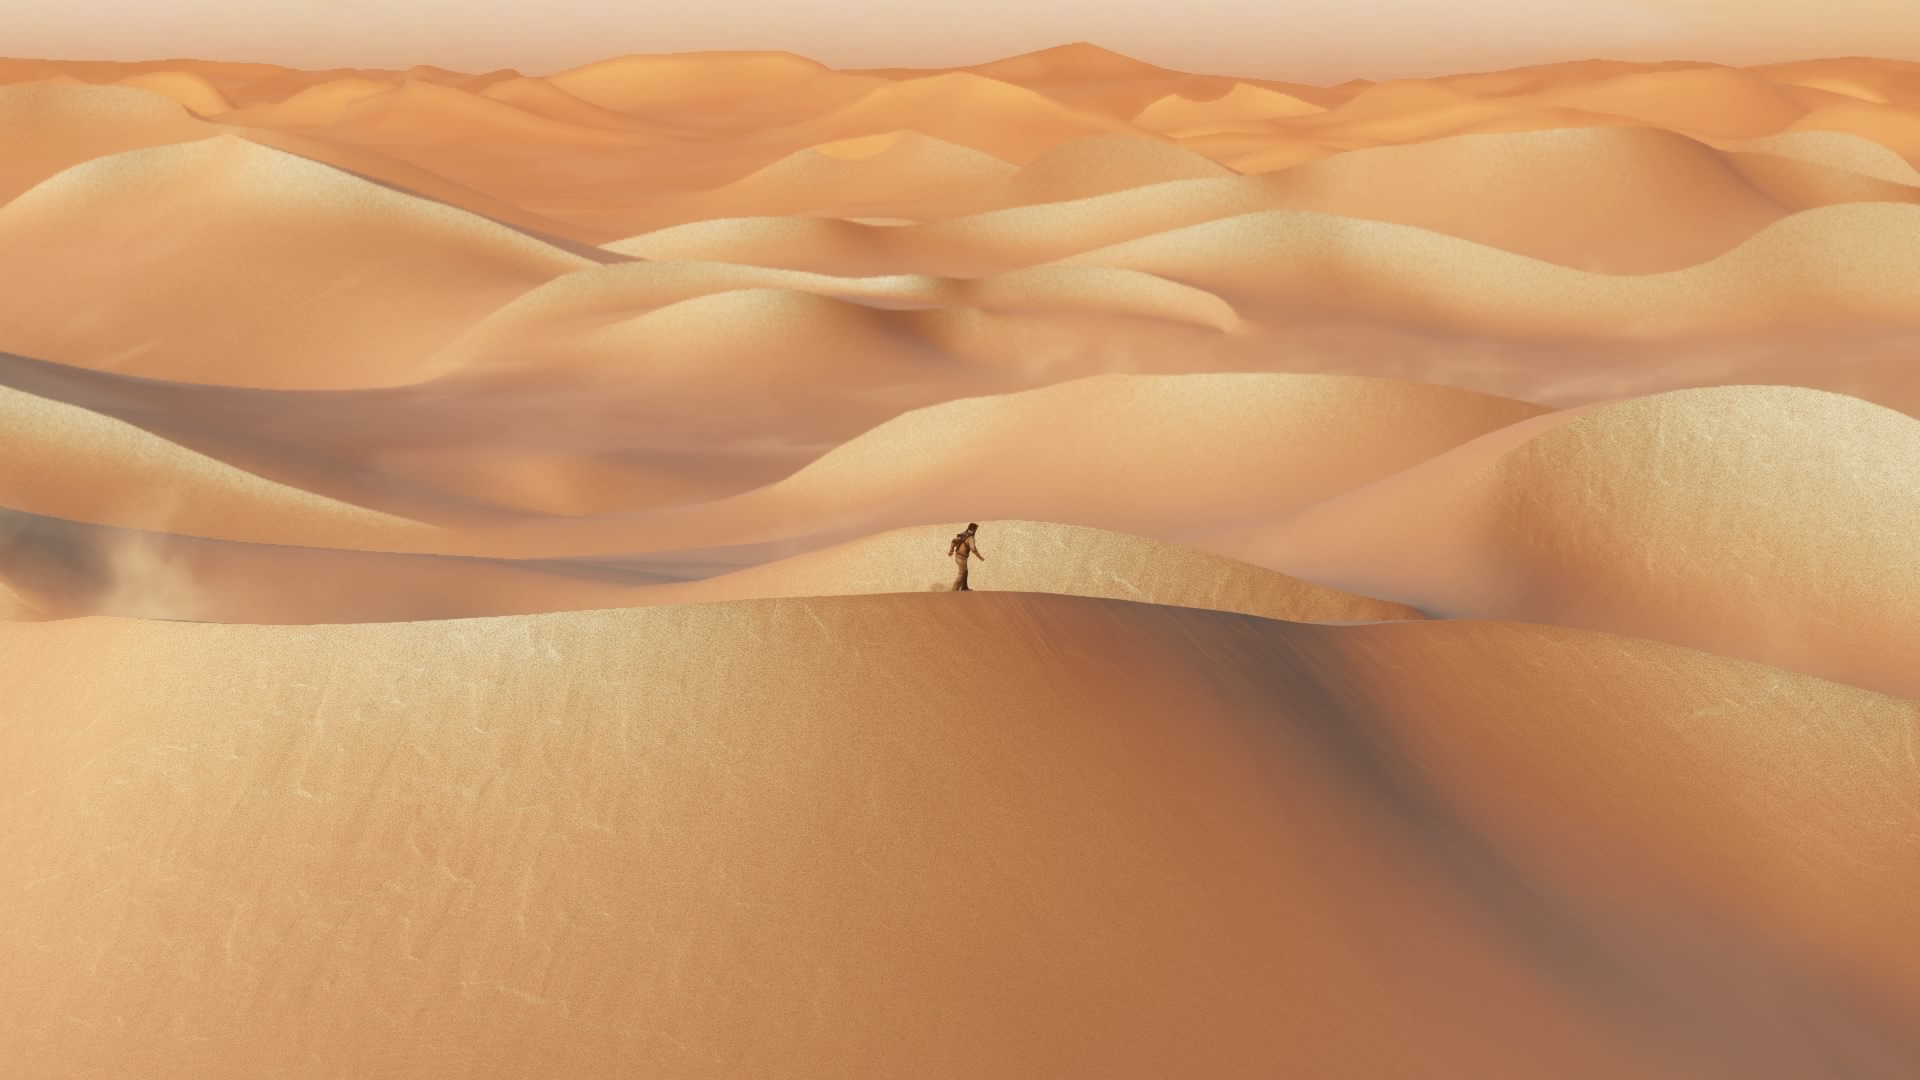 Drake staggers through an empty desert